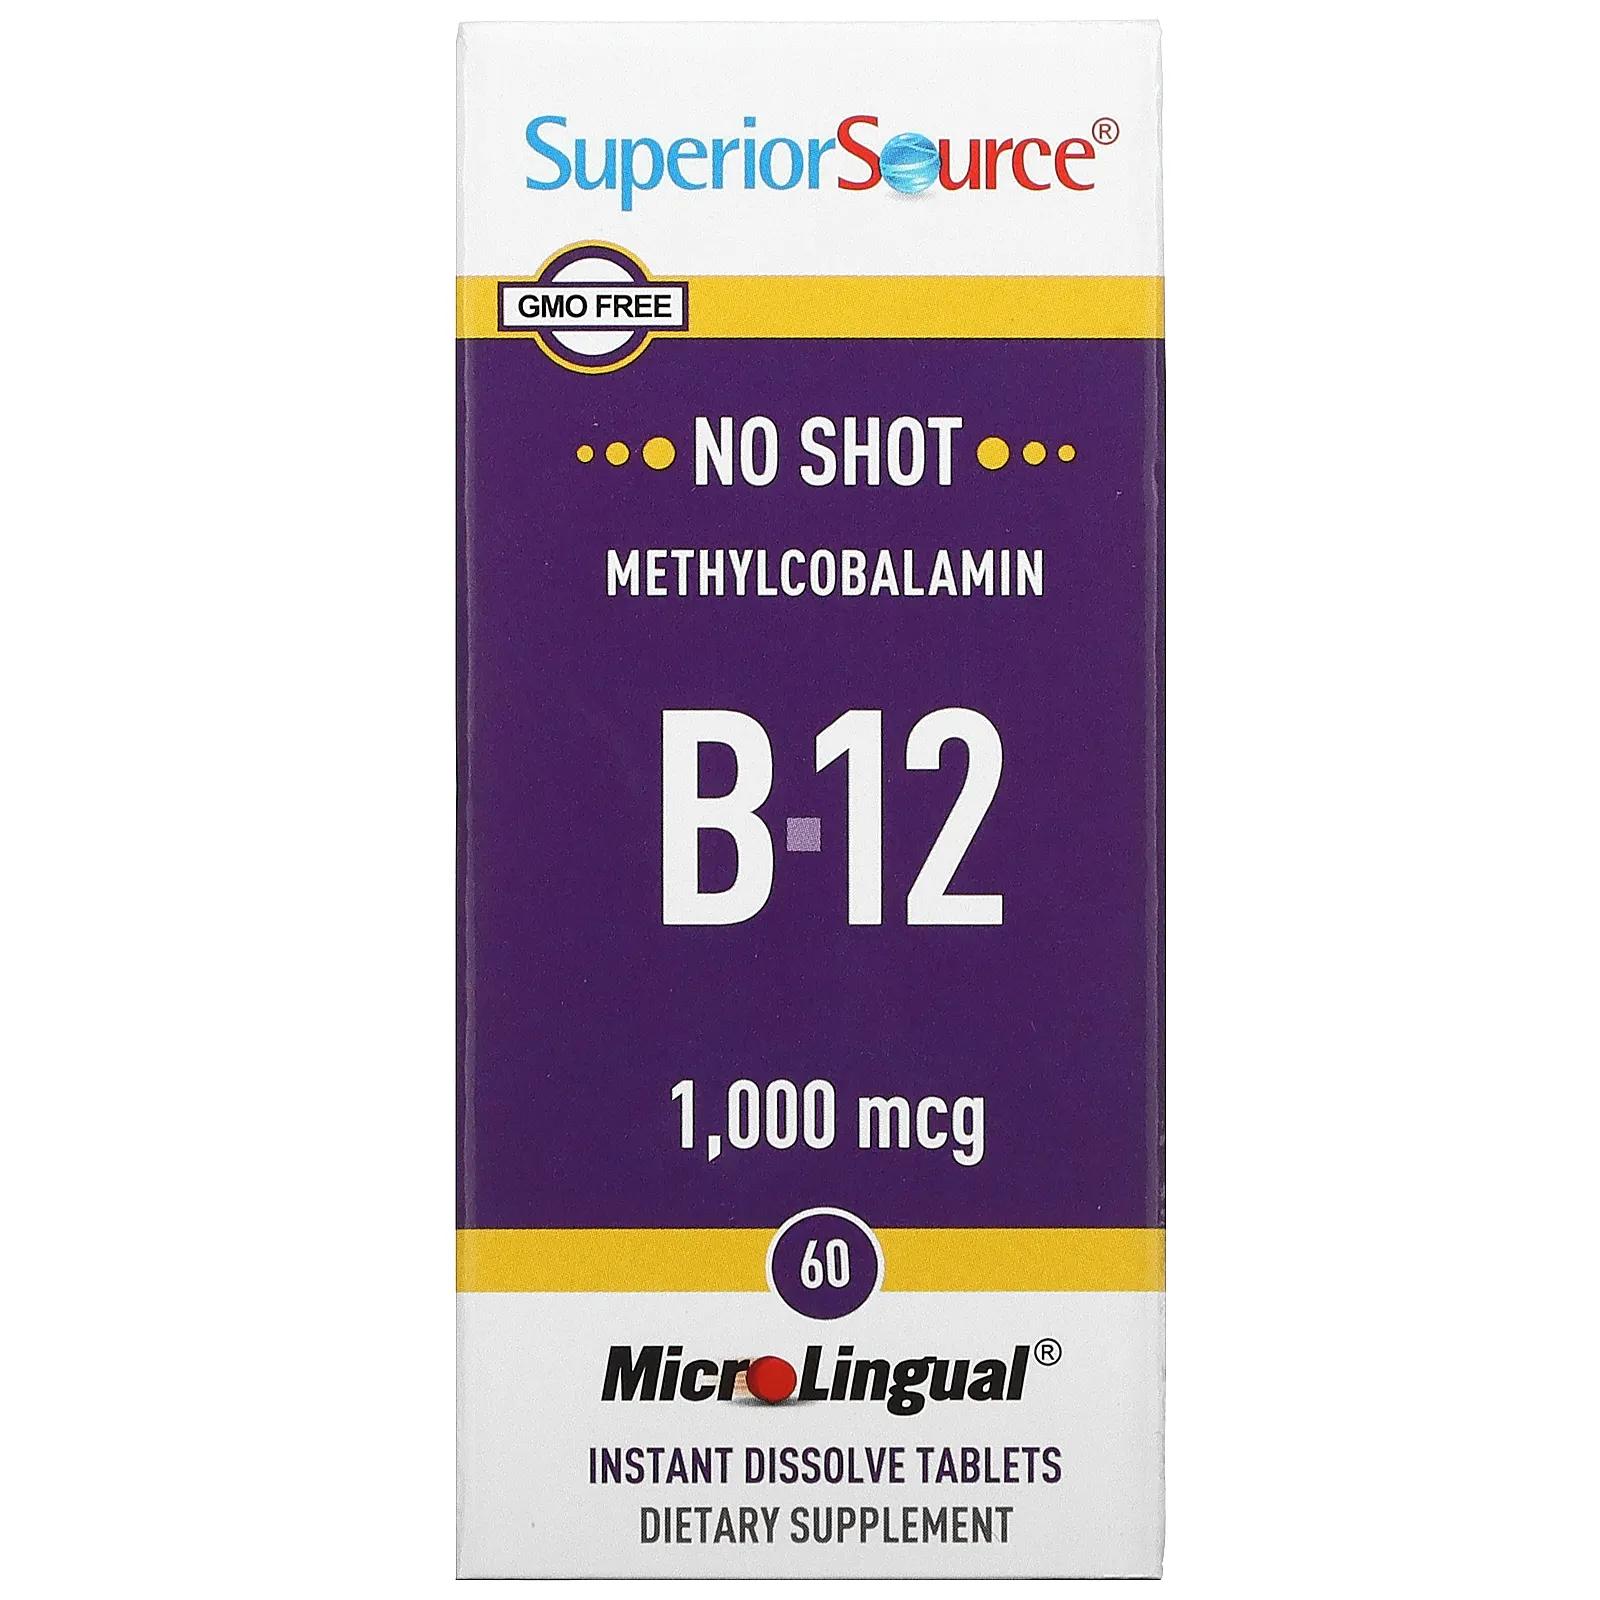 Superior Source Methylcobalamin B-12 1000 mcg 60 MicroLingual Instant Dissolve Tablets